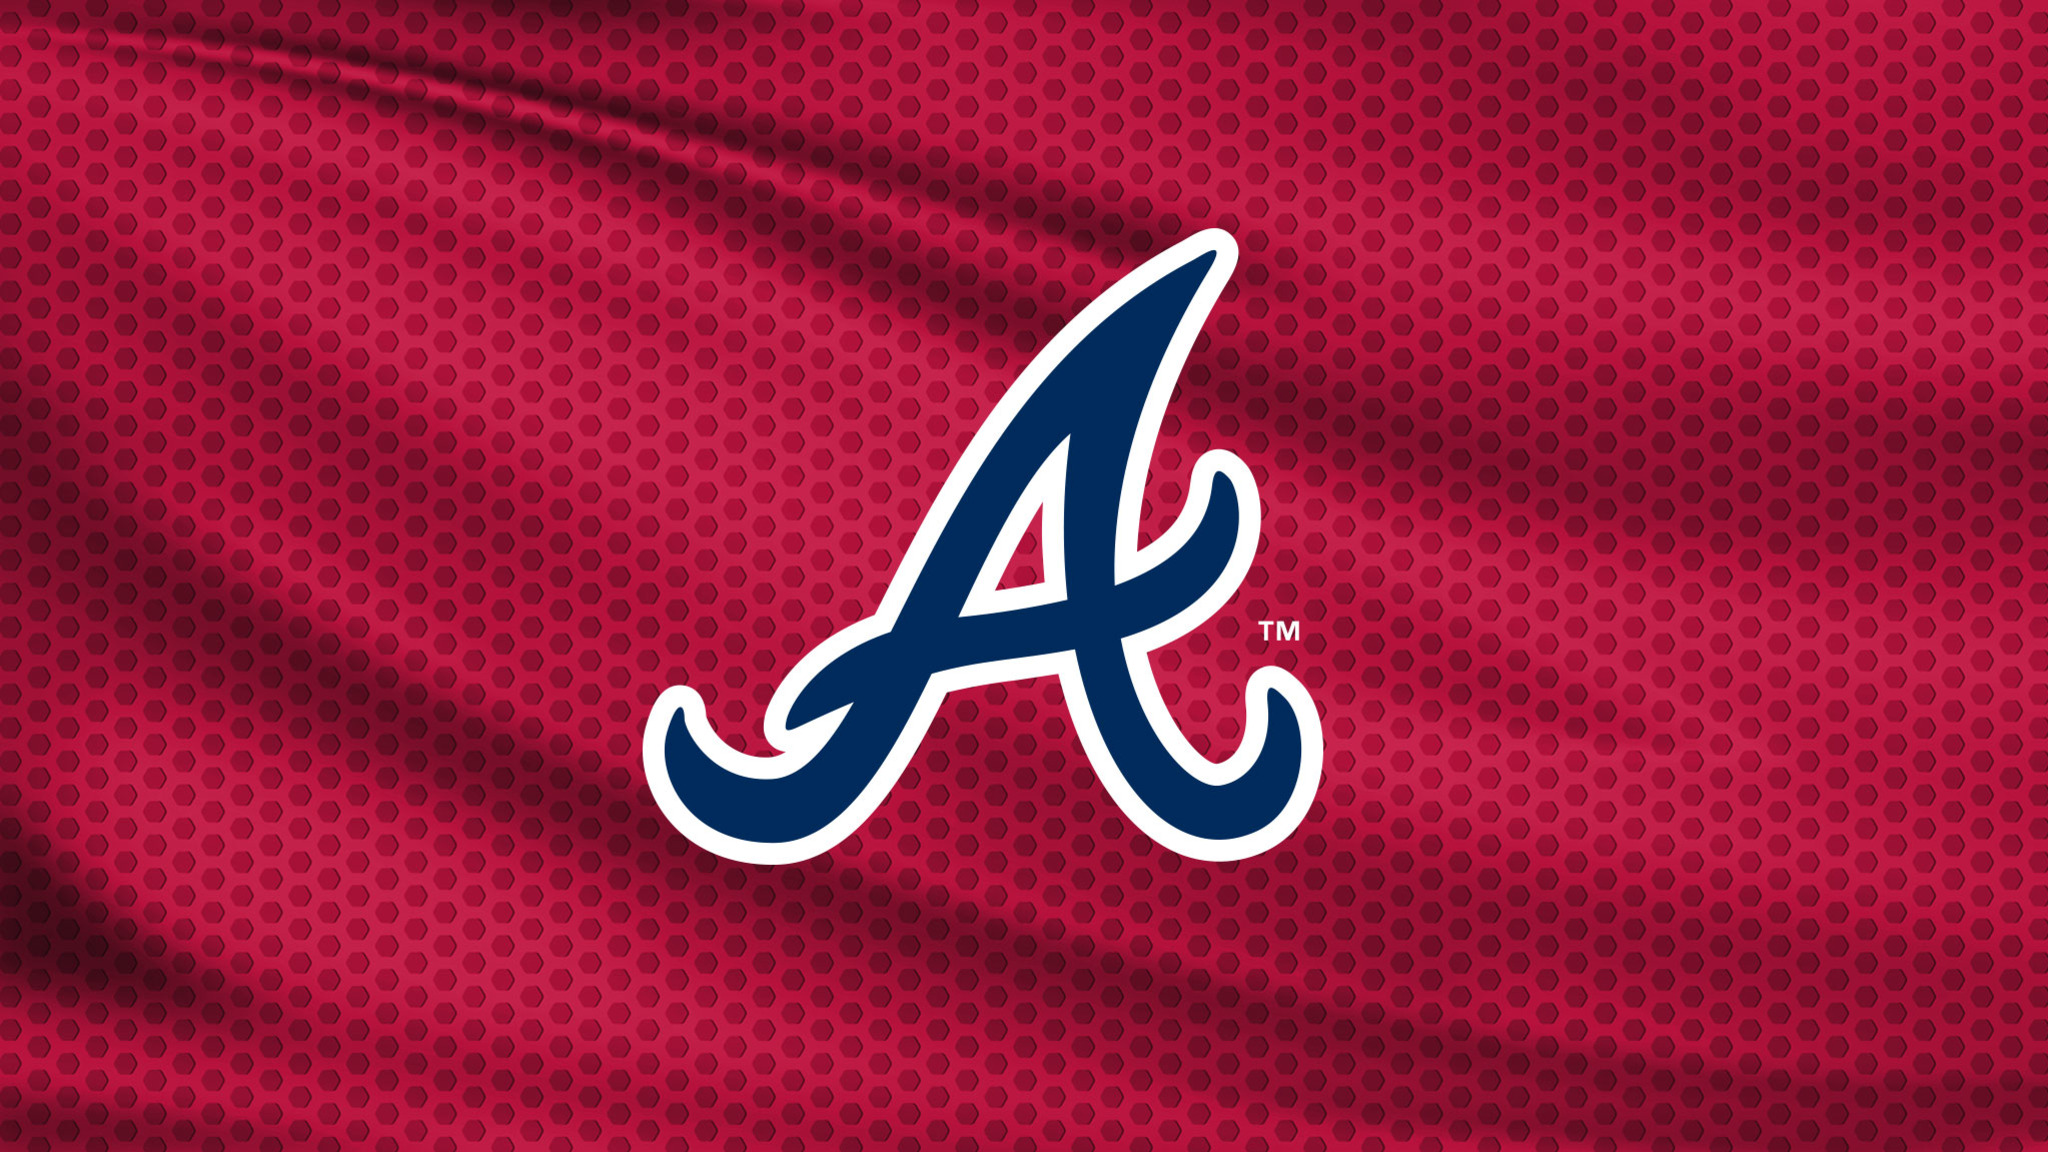 Official Atlanta Braves Website